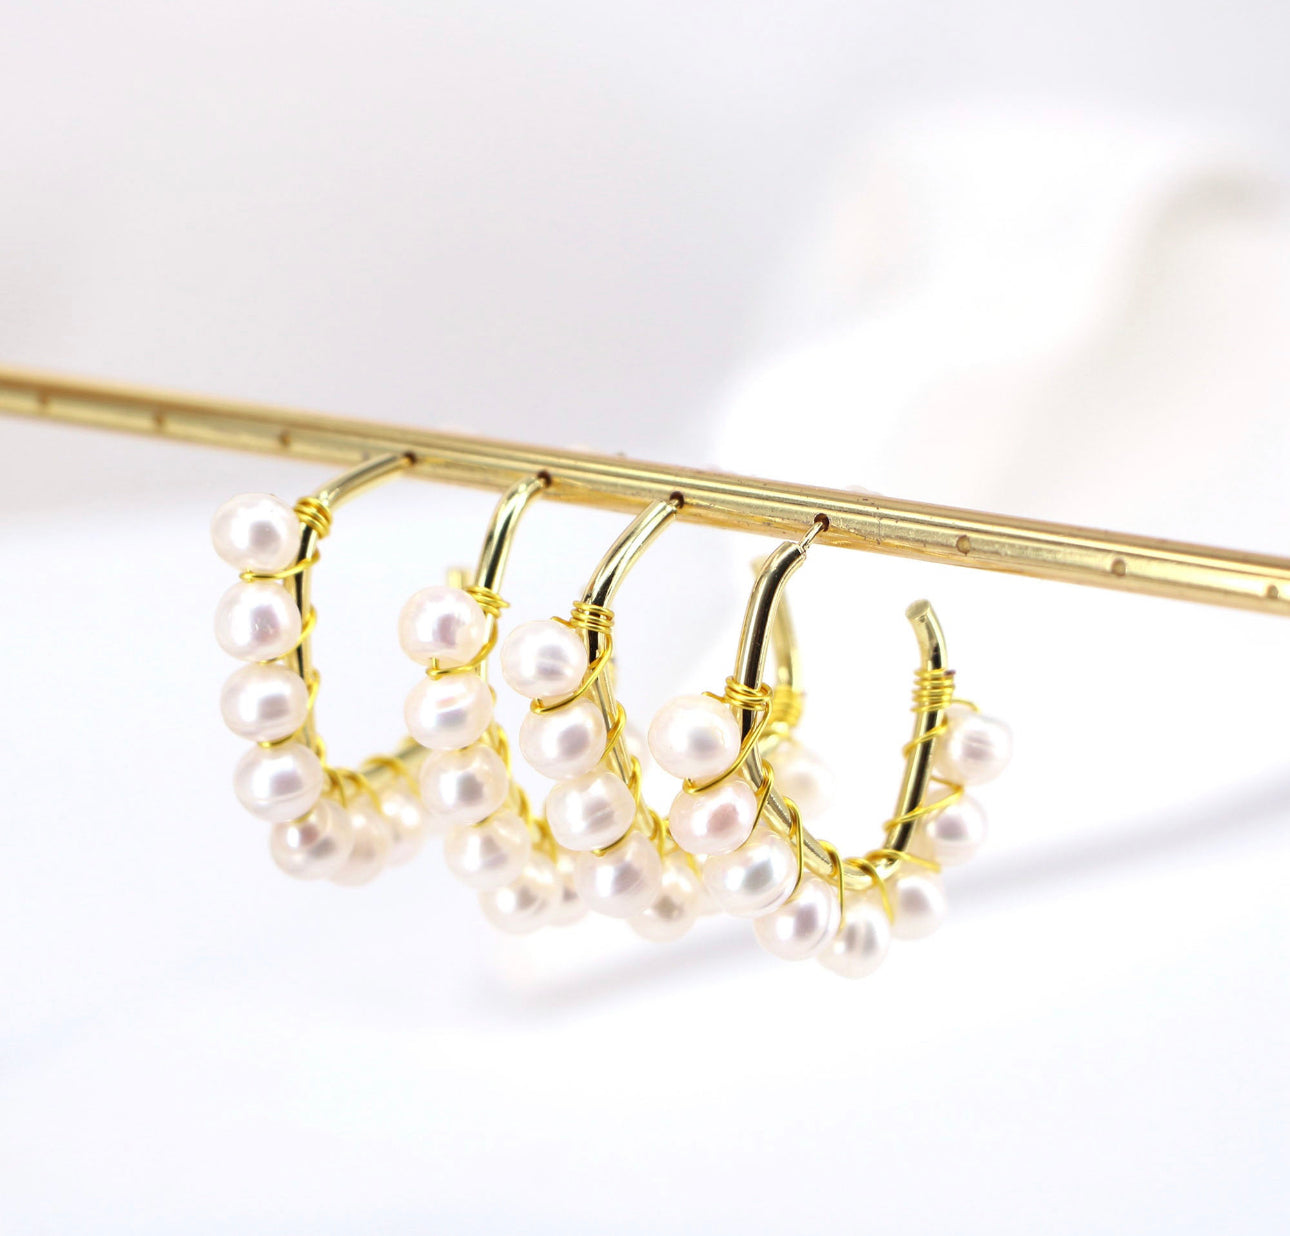 Erika Williner Designs - Arabella Earrings